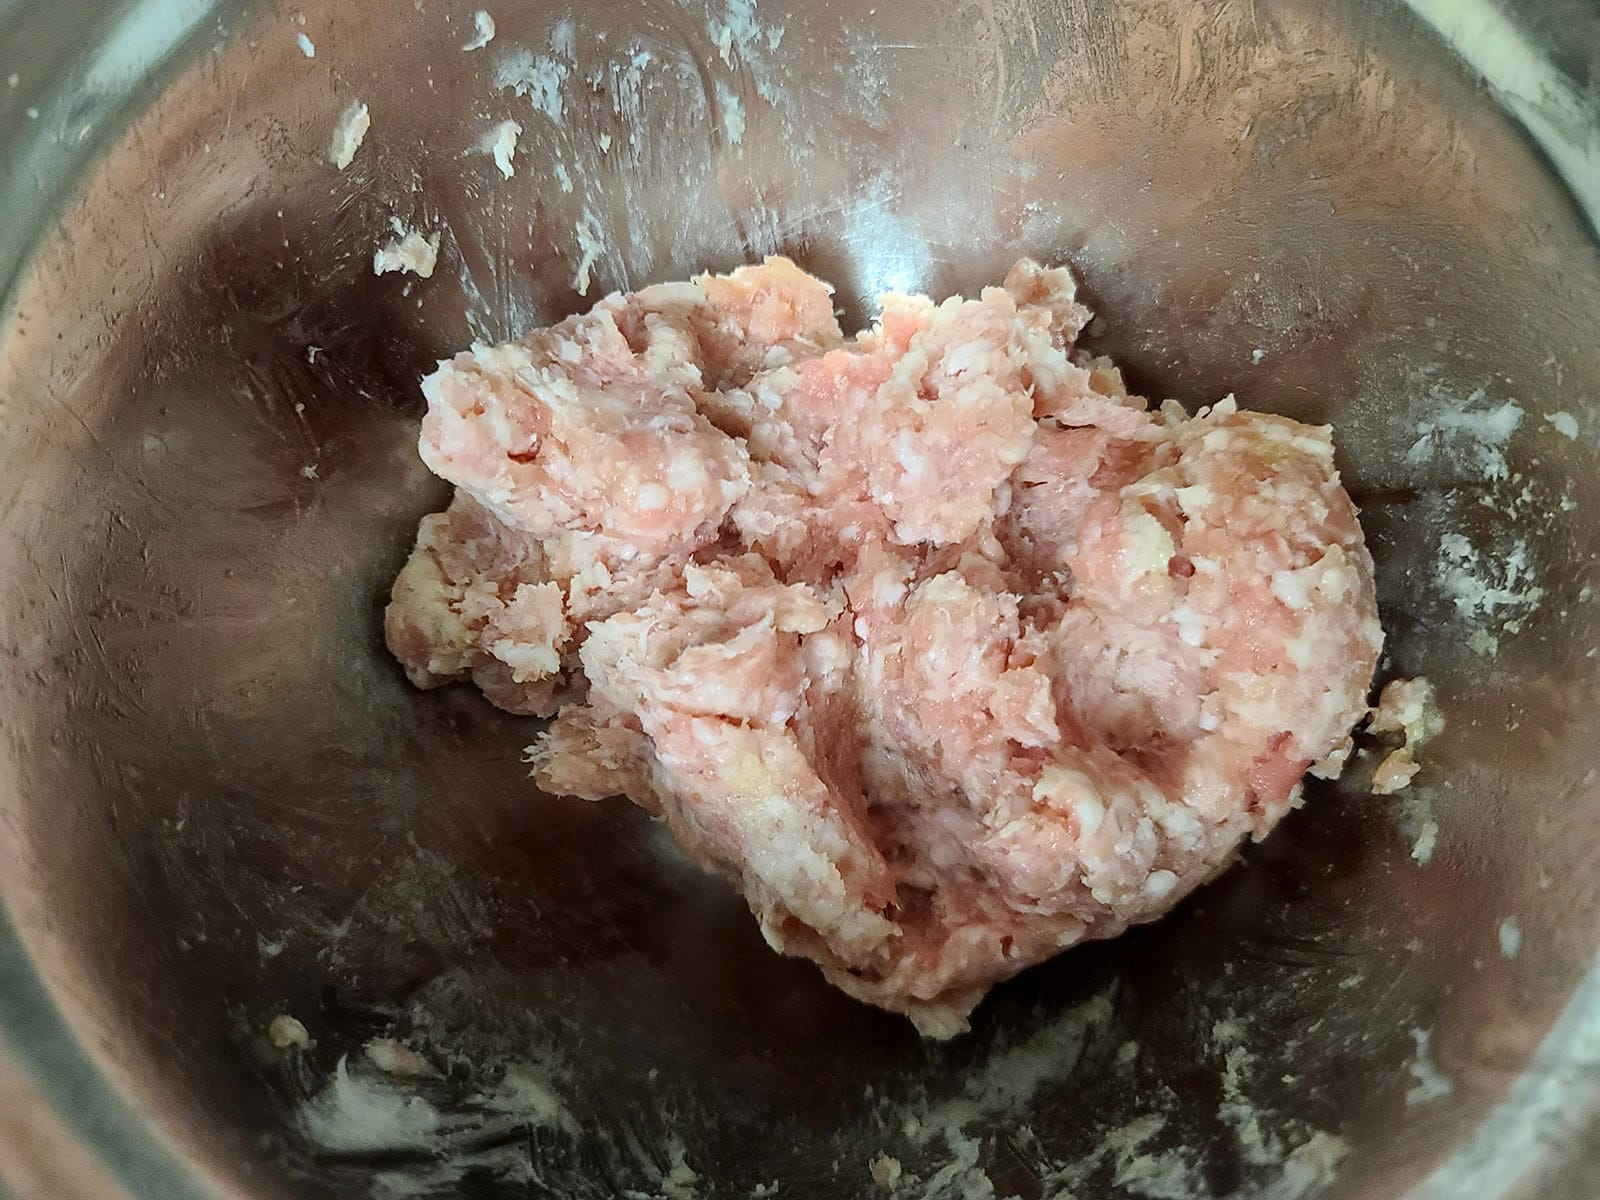 A bowl of homemade ground pork sausage meat.